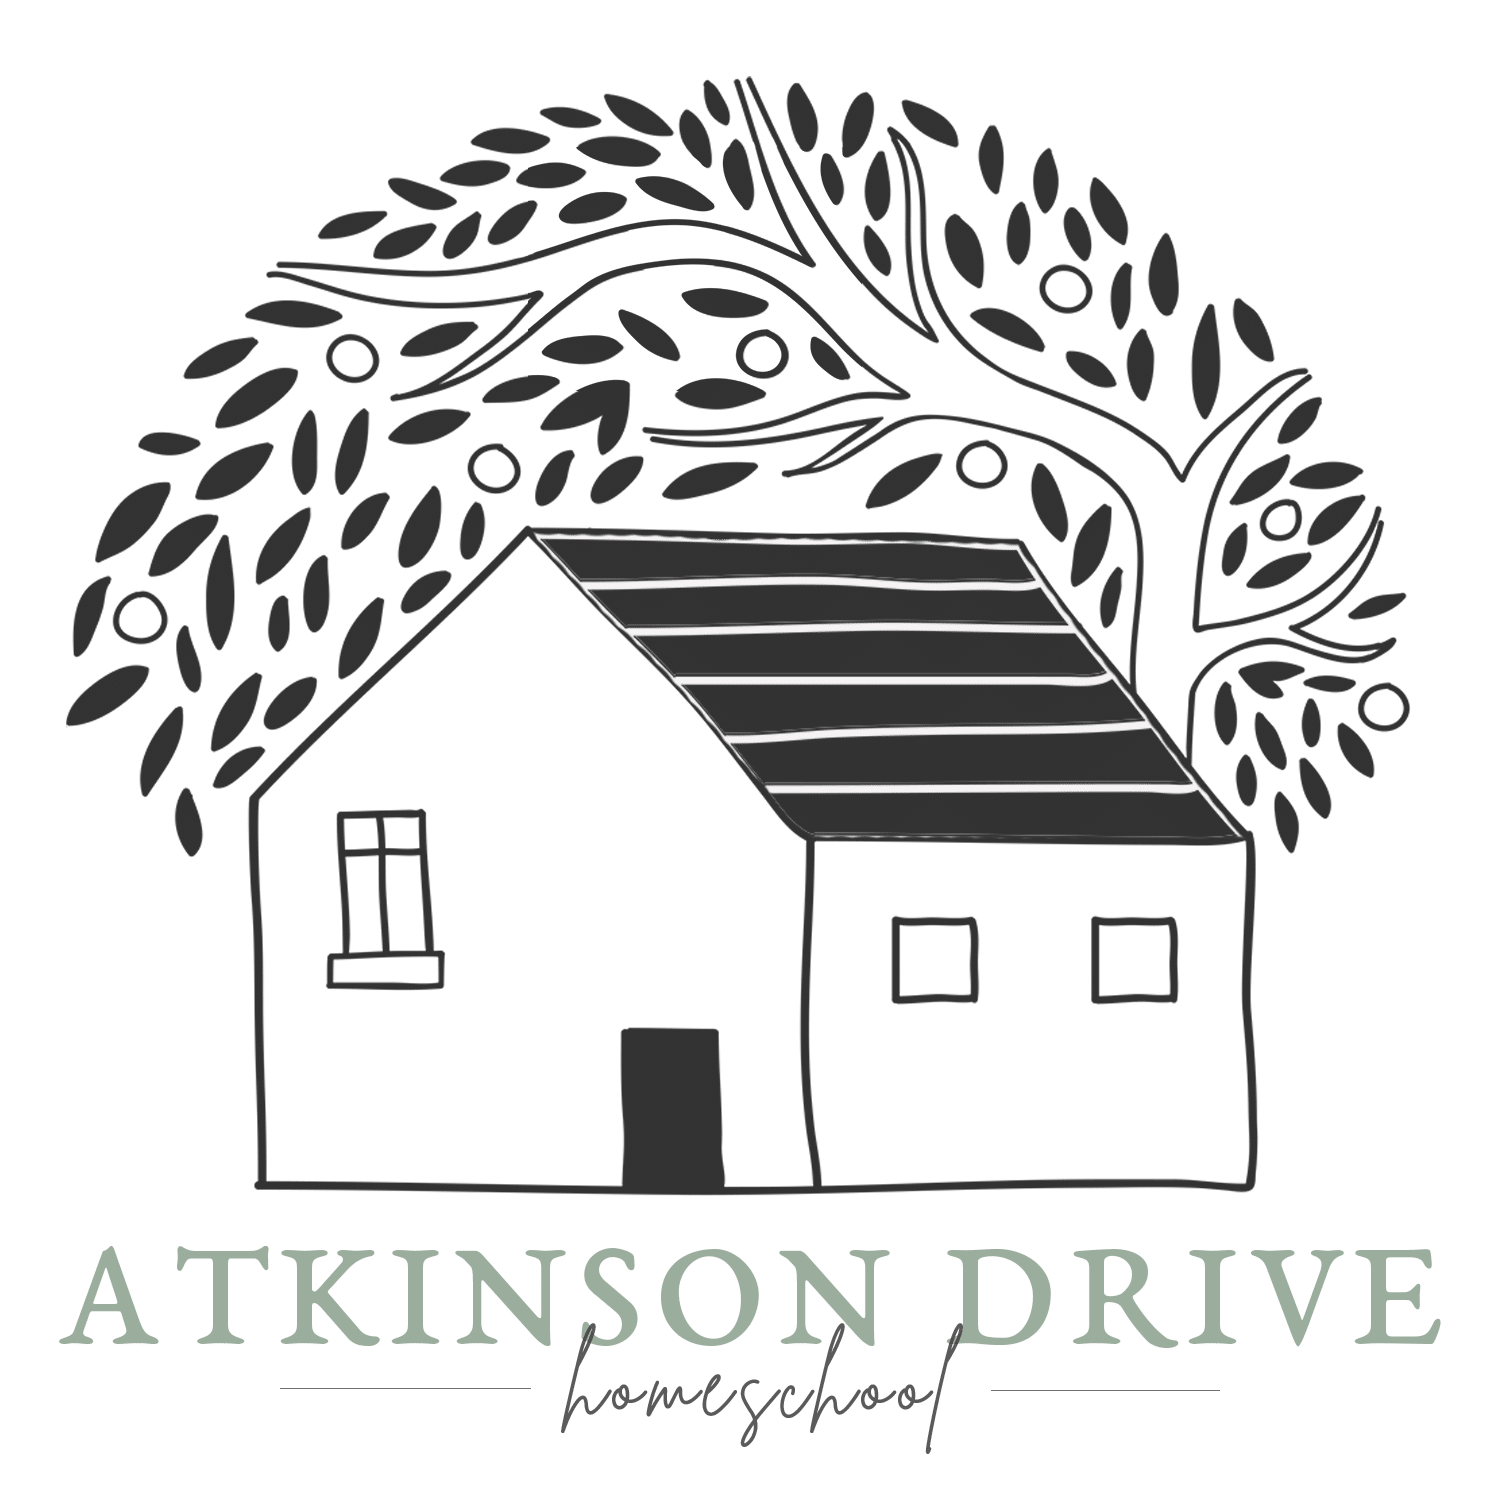 Homeschool with Atkinson Drive